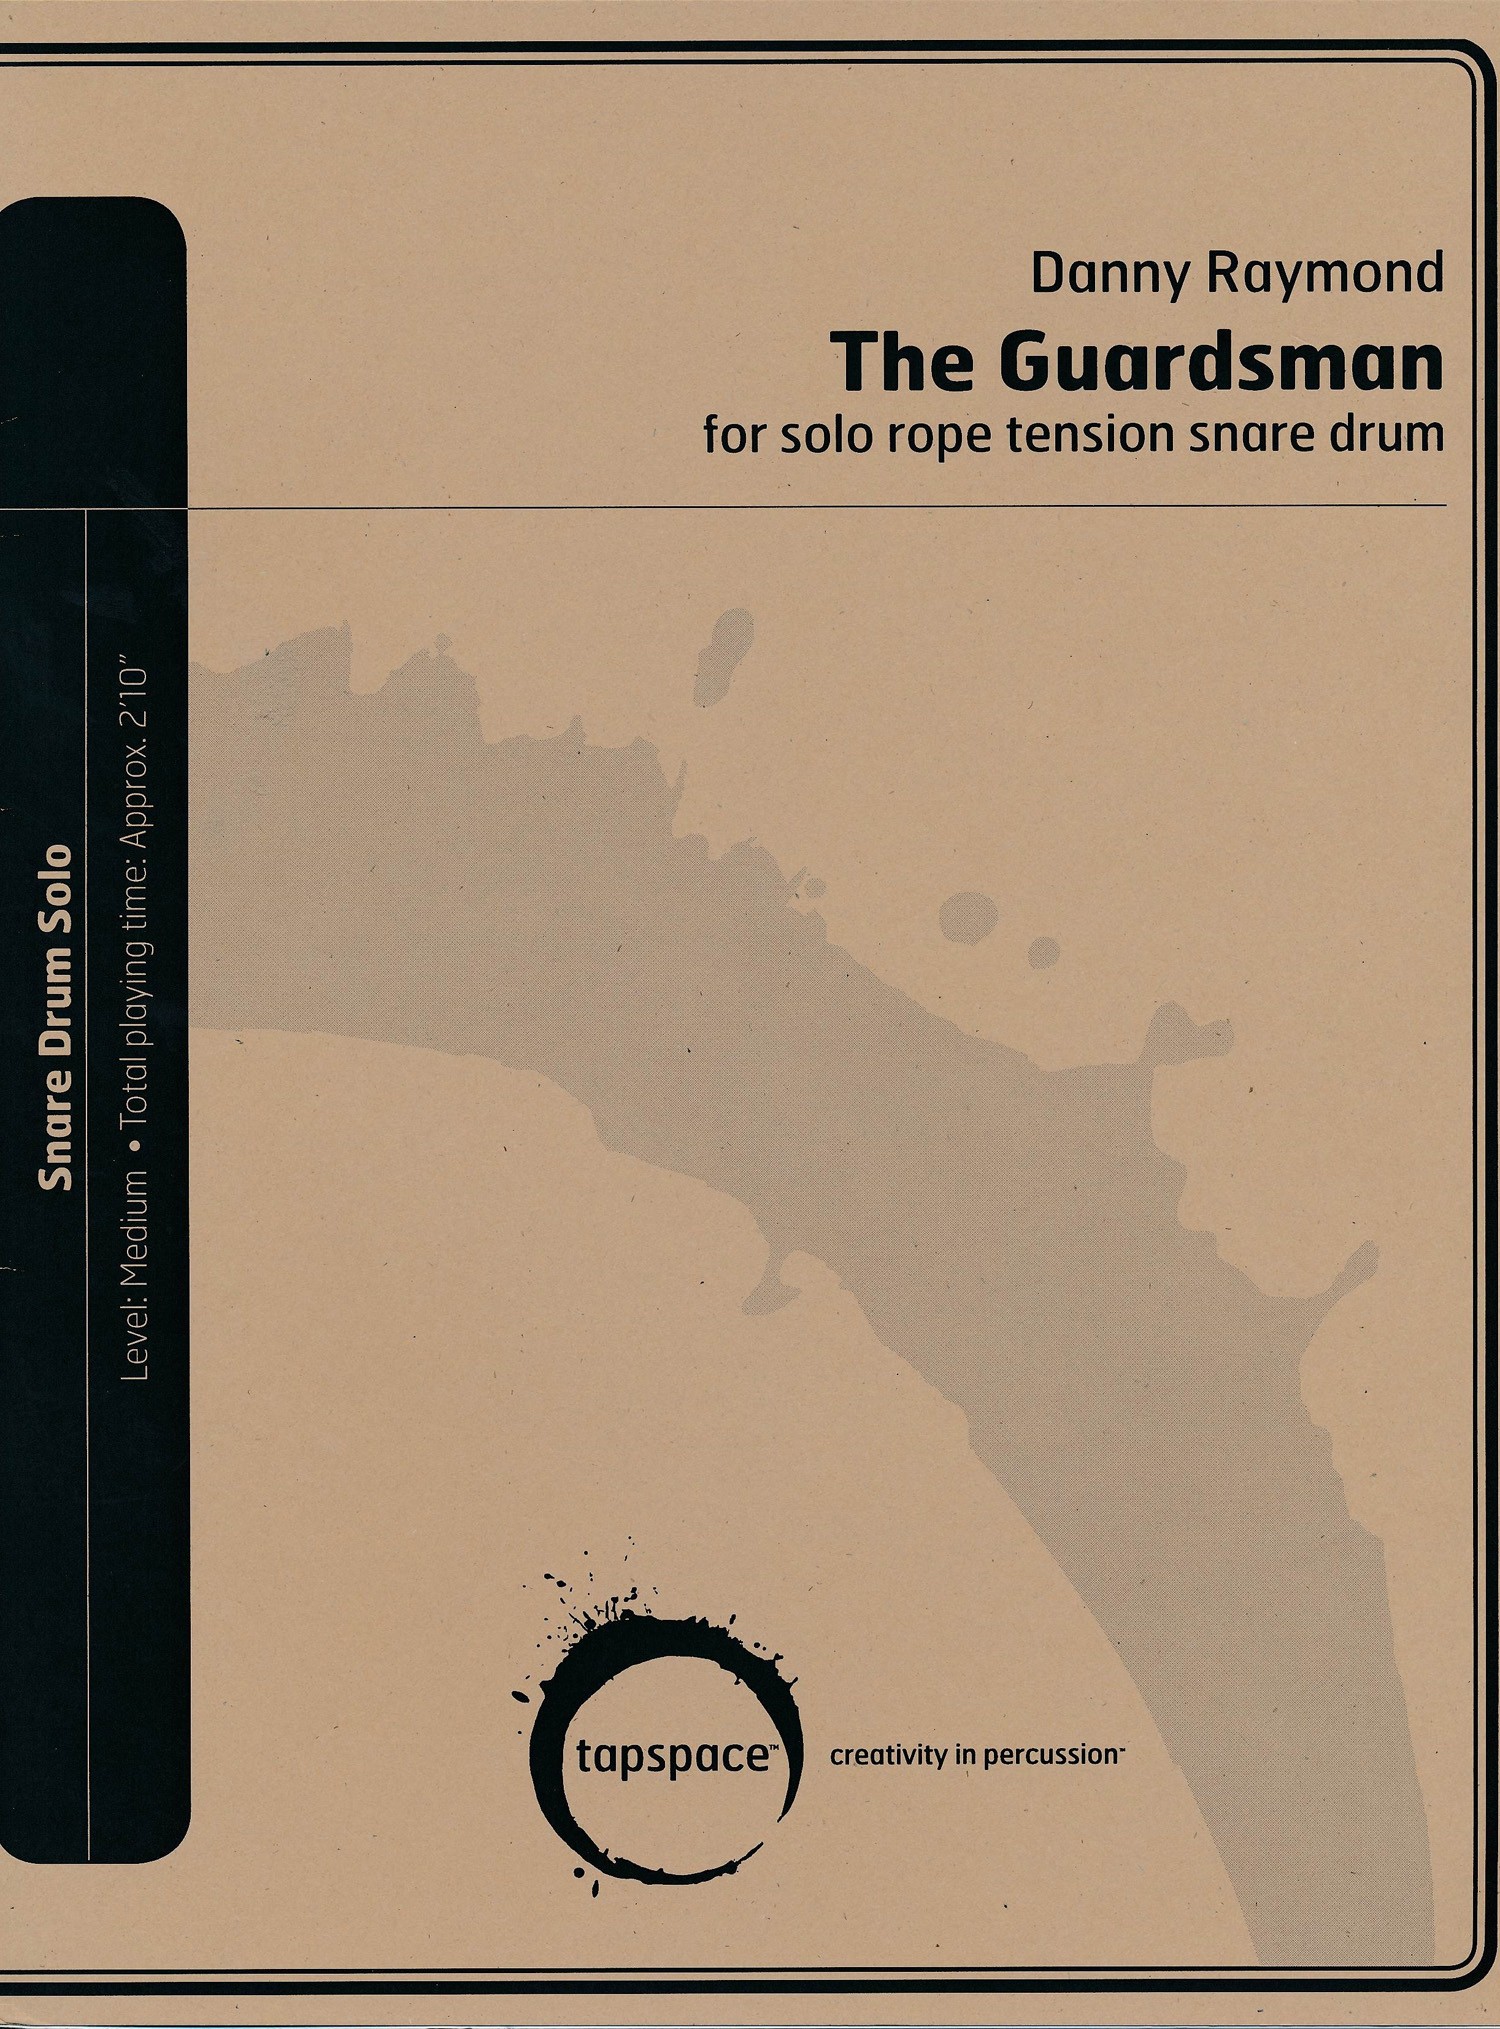 The Guardsman by Danny Raymond